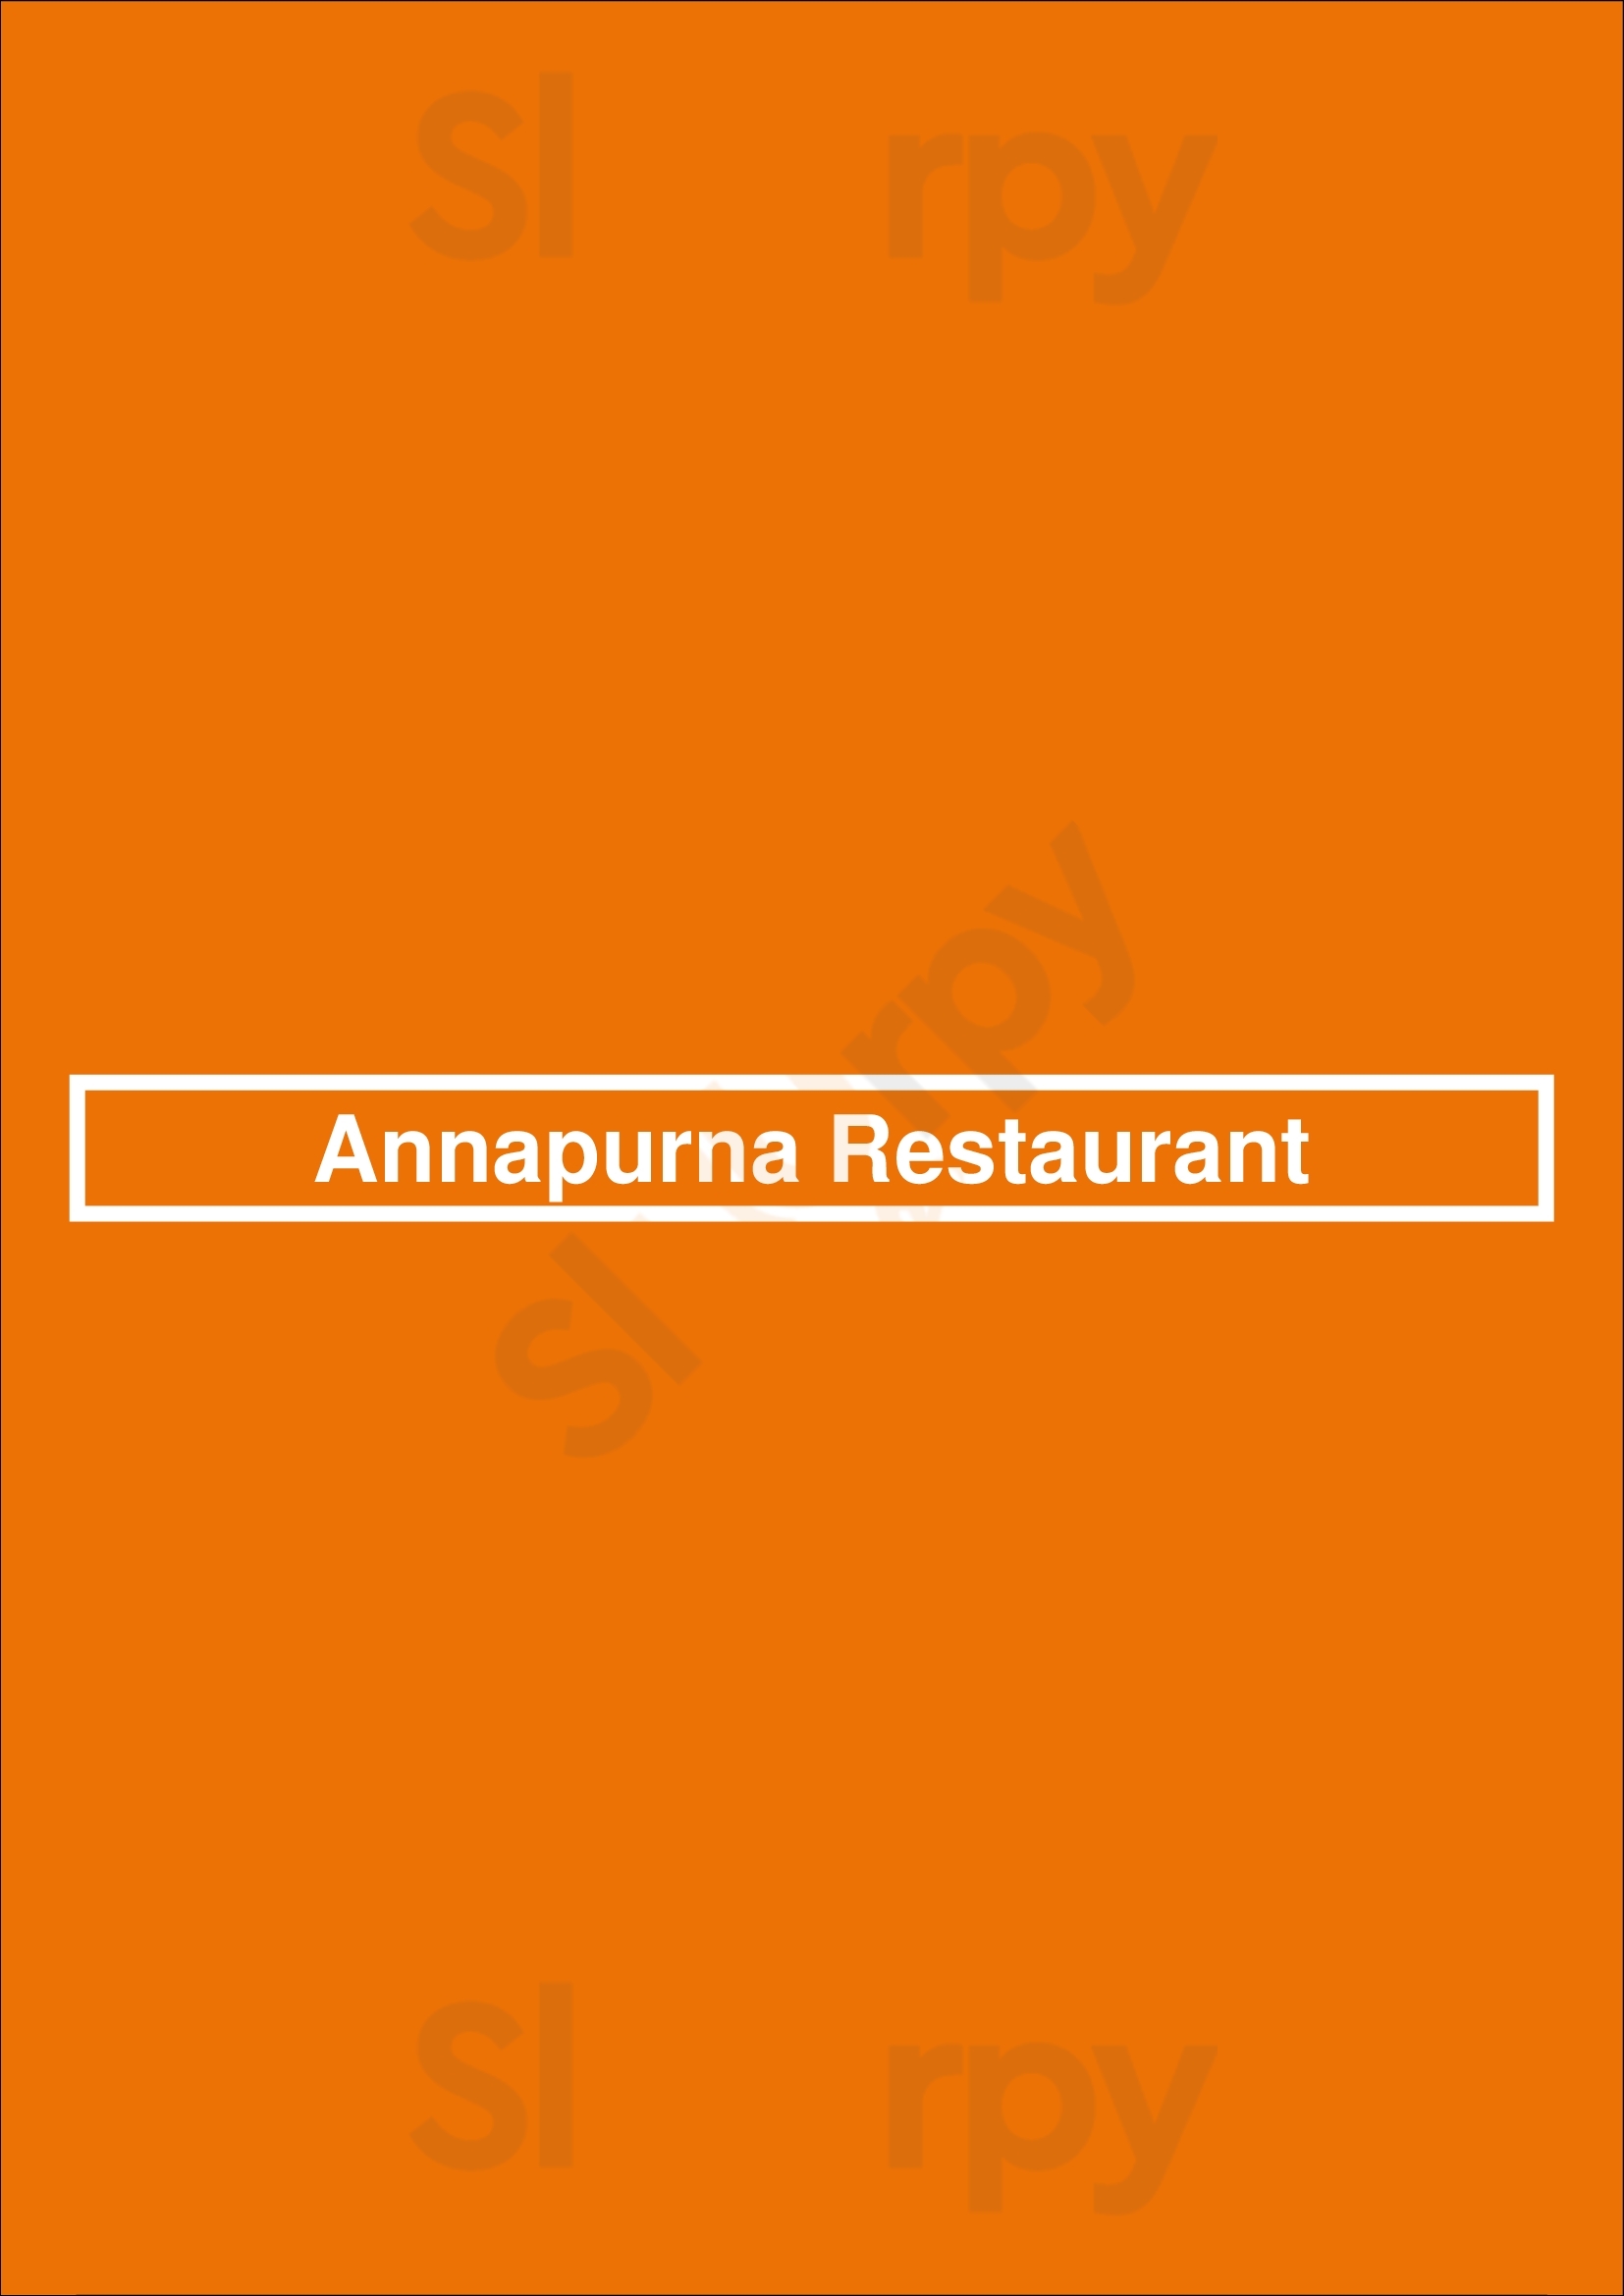 Annapurna Restaurant Kessel-Lo Menu - 1